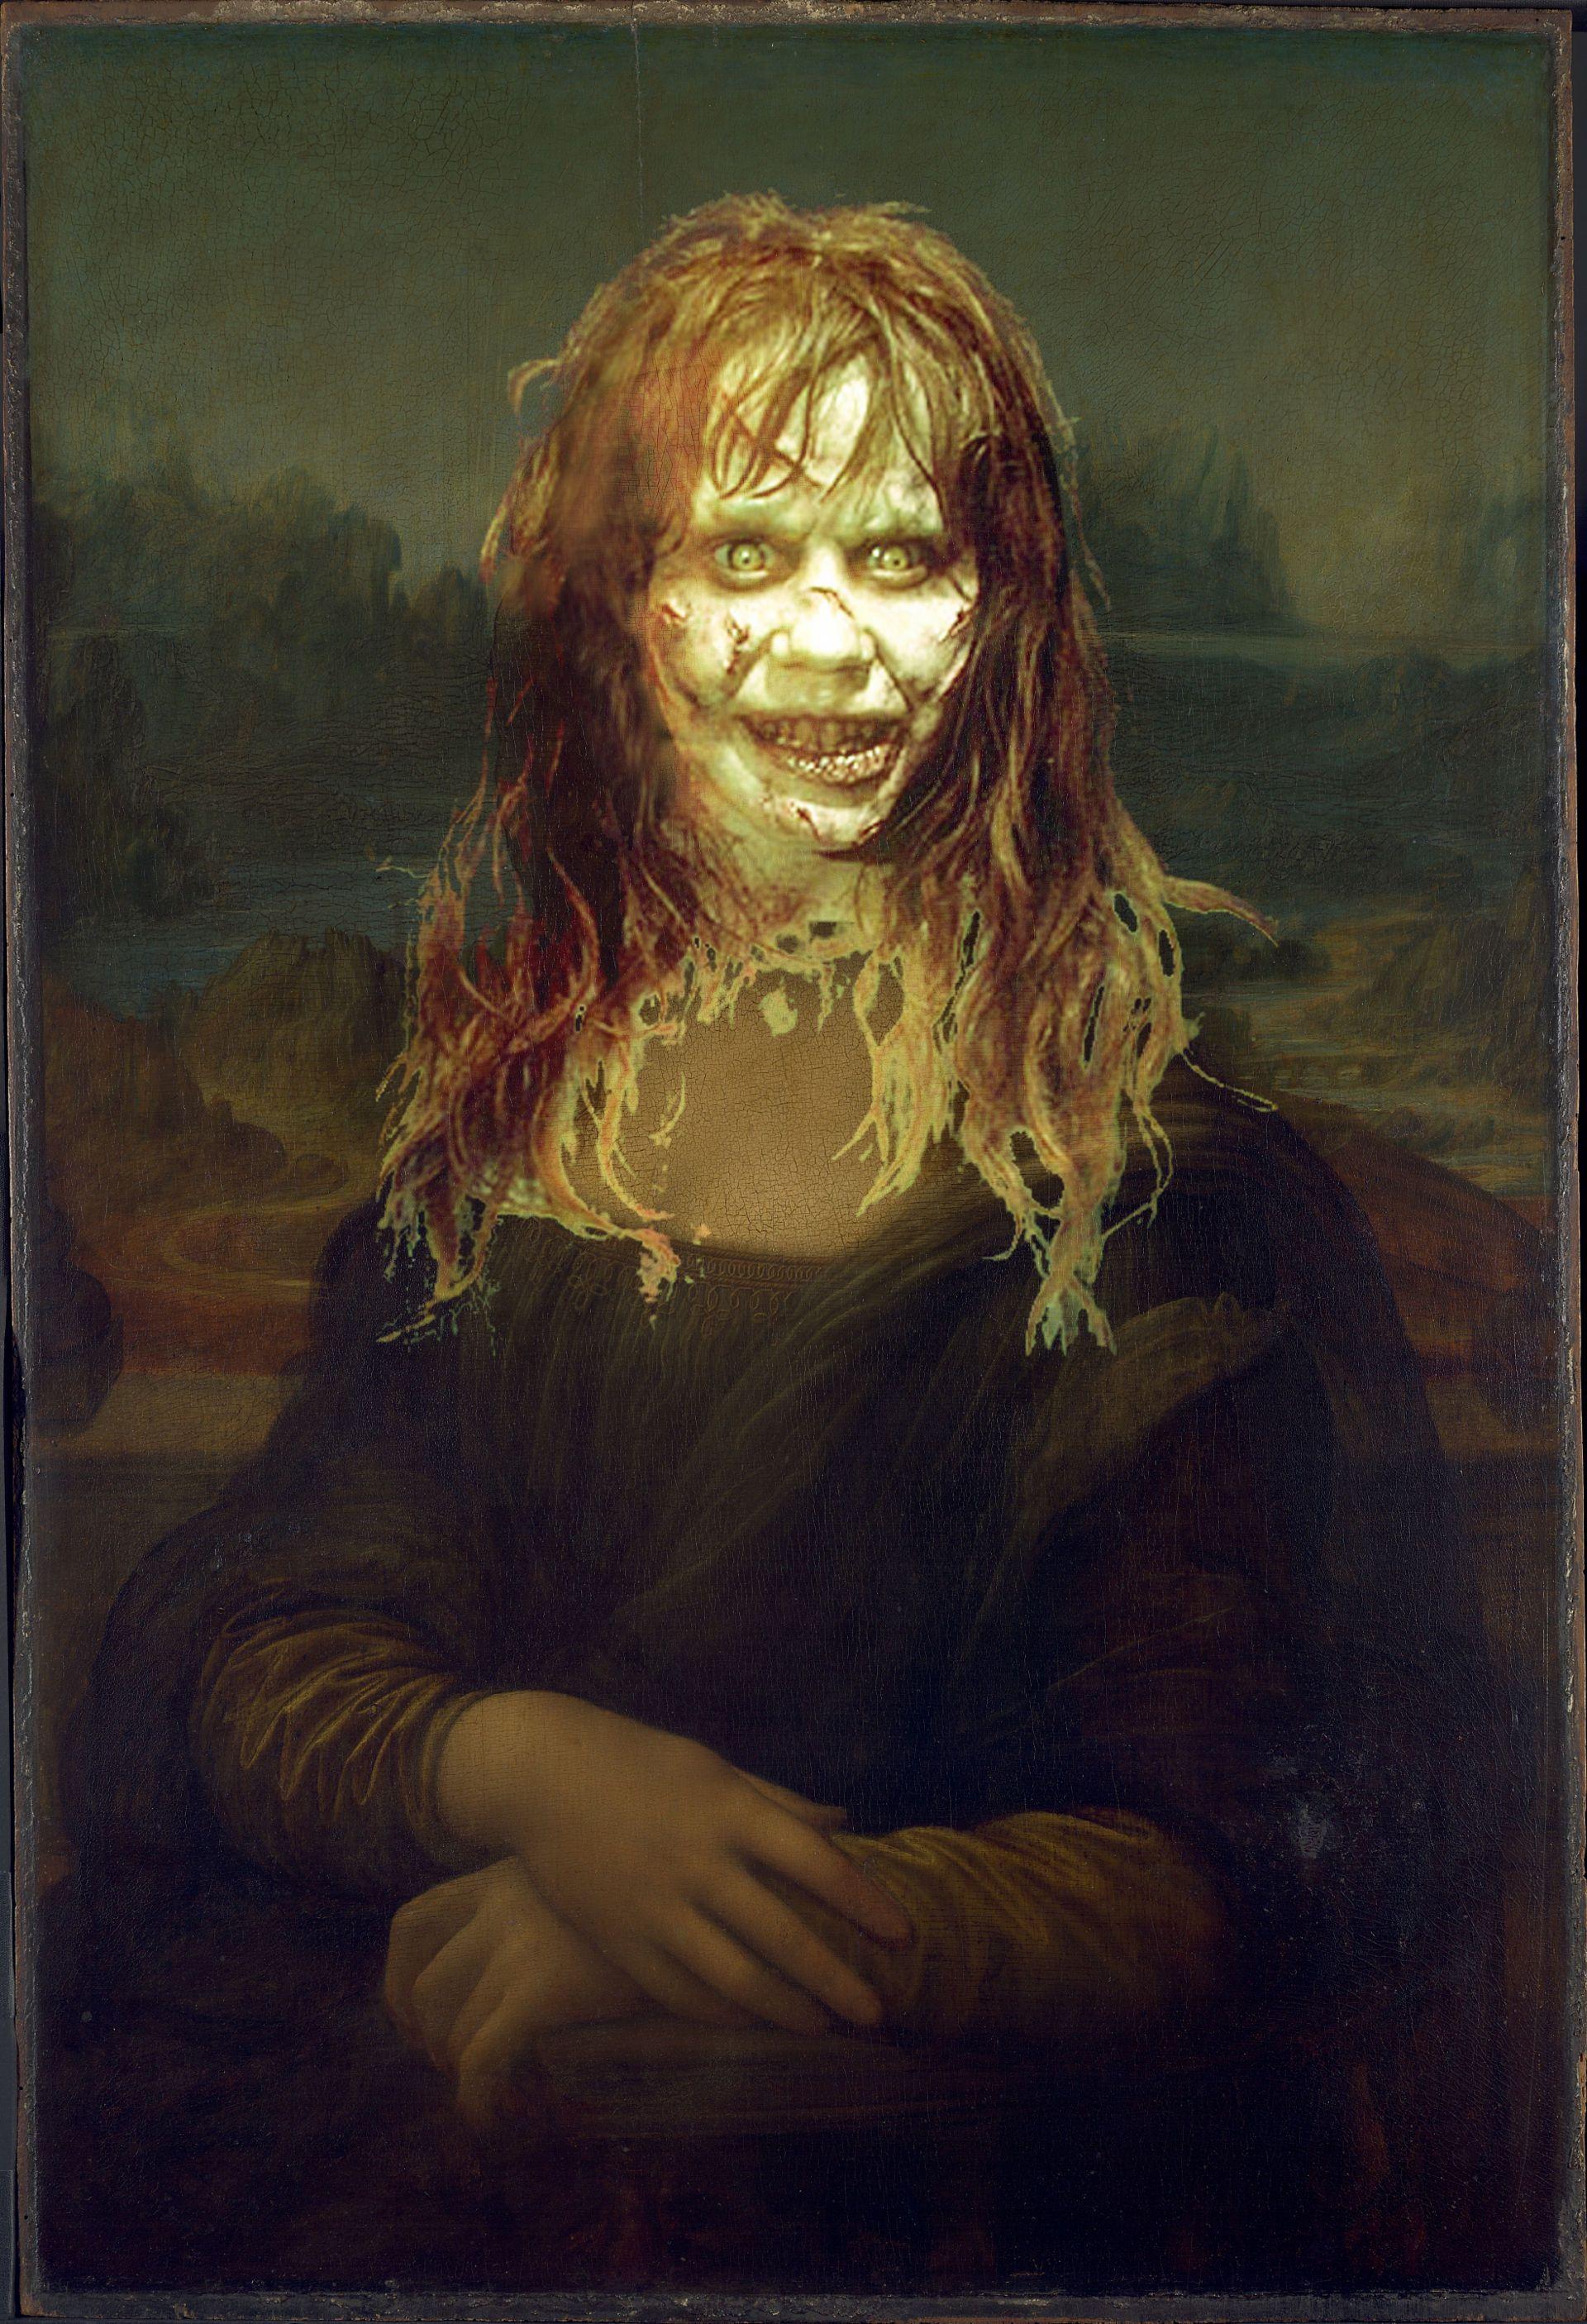 A painting of mona lisa with glowing eyes - Mona Lisa